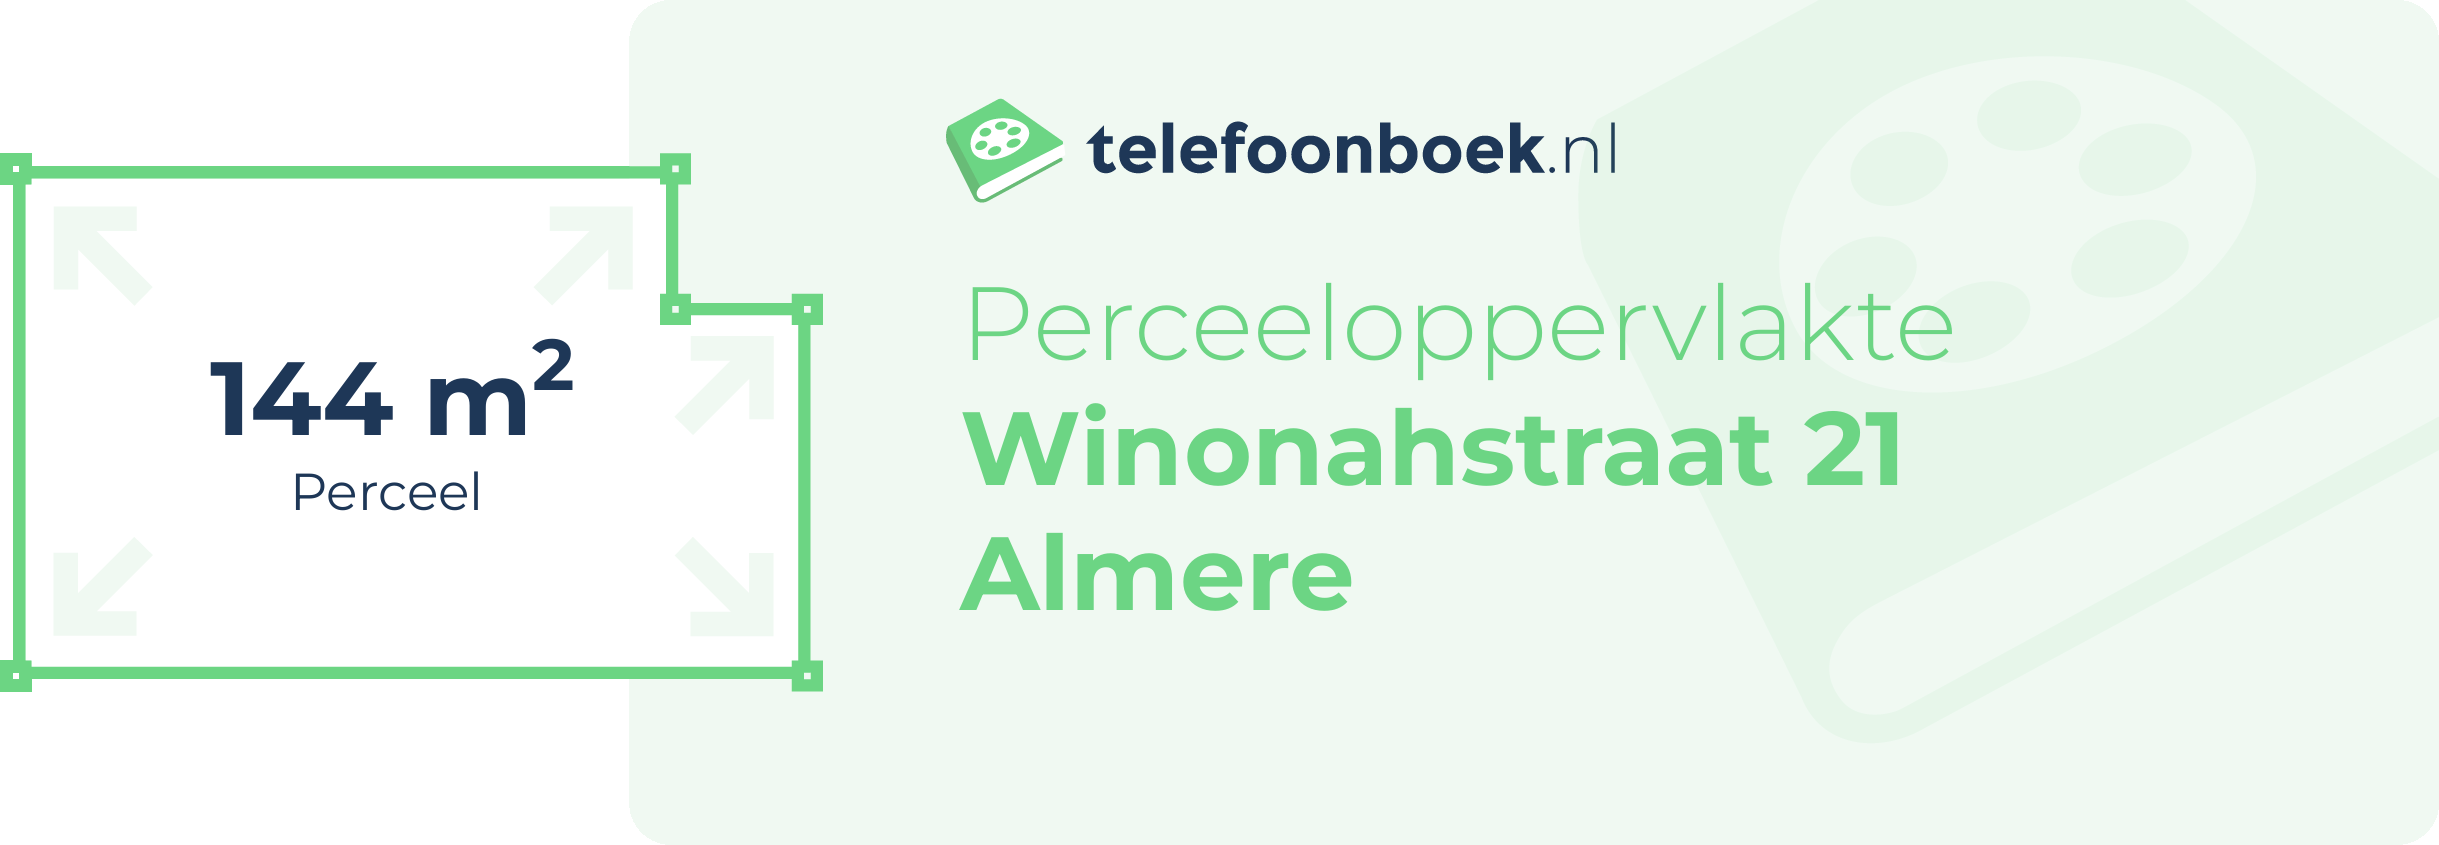 Perceeloppervlakte Winonahstraat 21 Almere